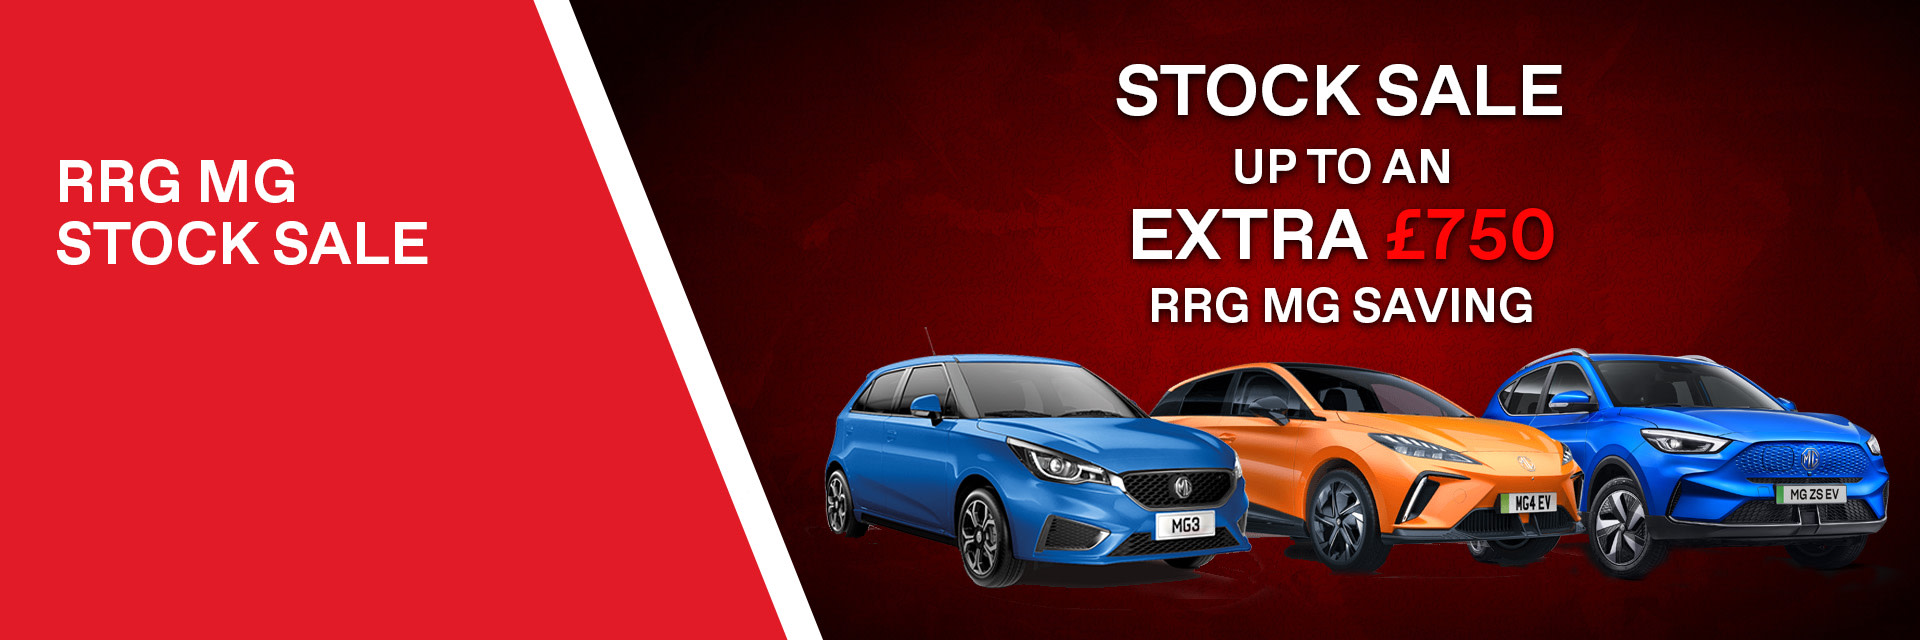 RRG MG Stock Sale - Extra £750 Saving